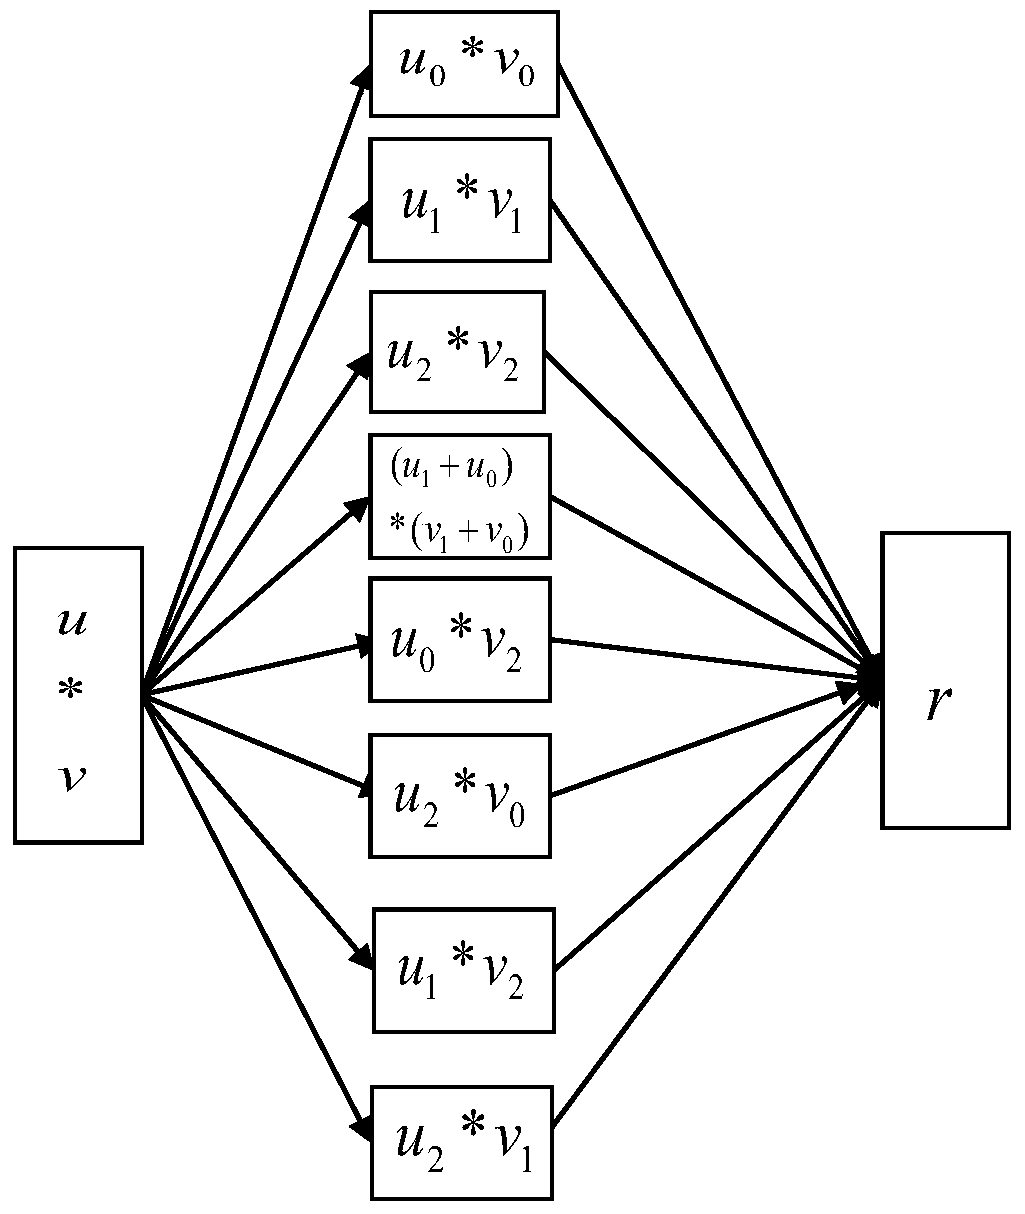 A Parallel Implementation Method of Large Integer Multiplication Karatsuba Algorithm